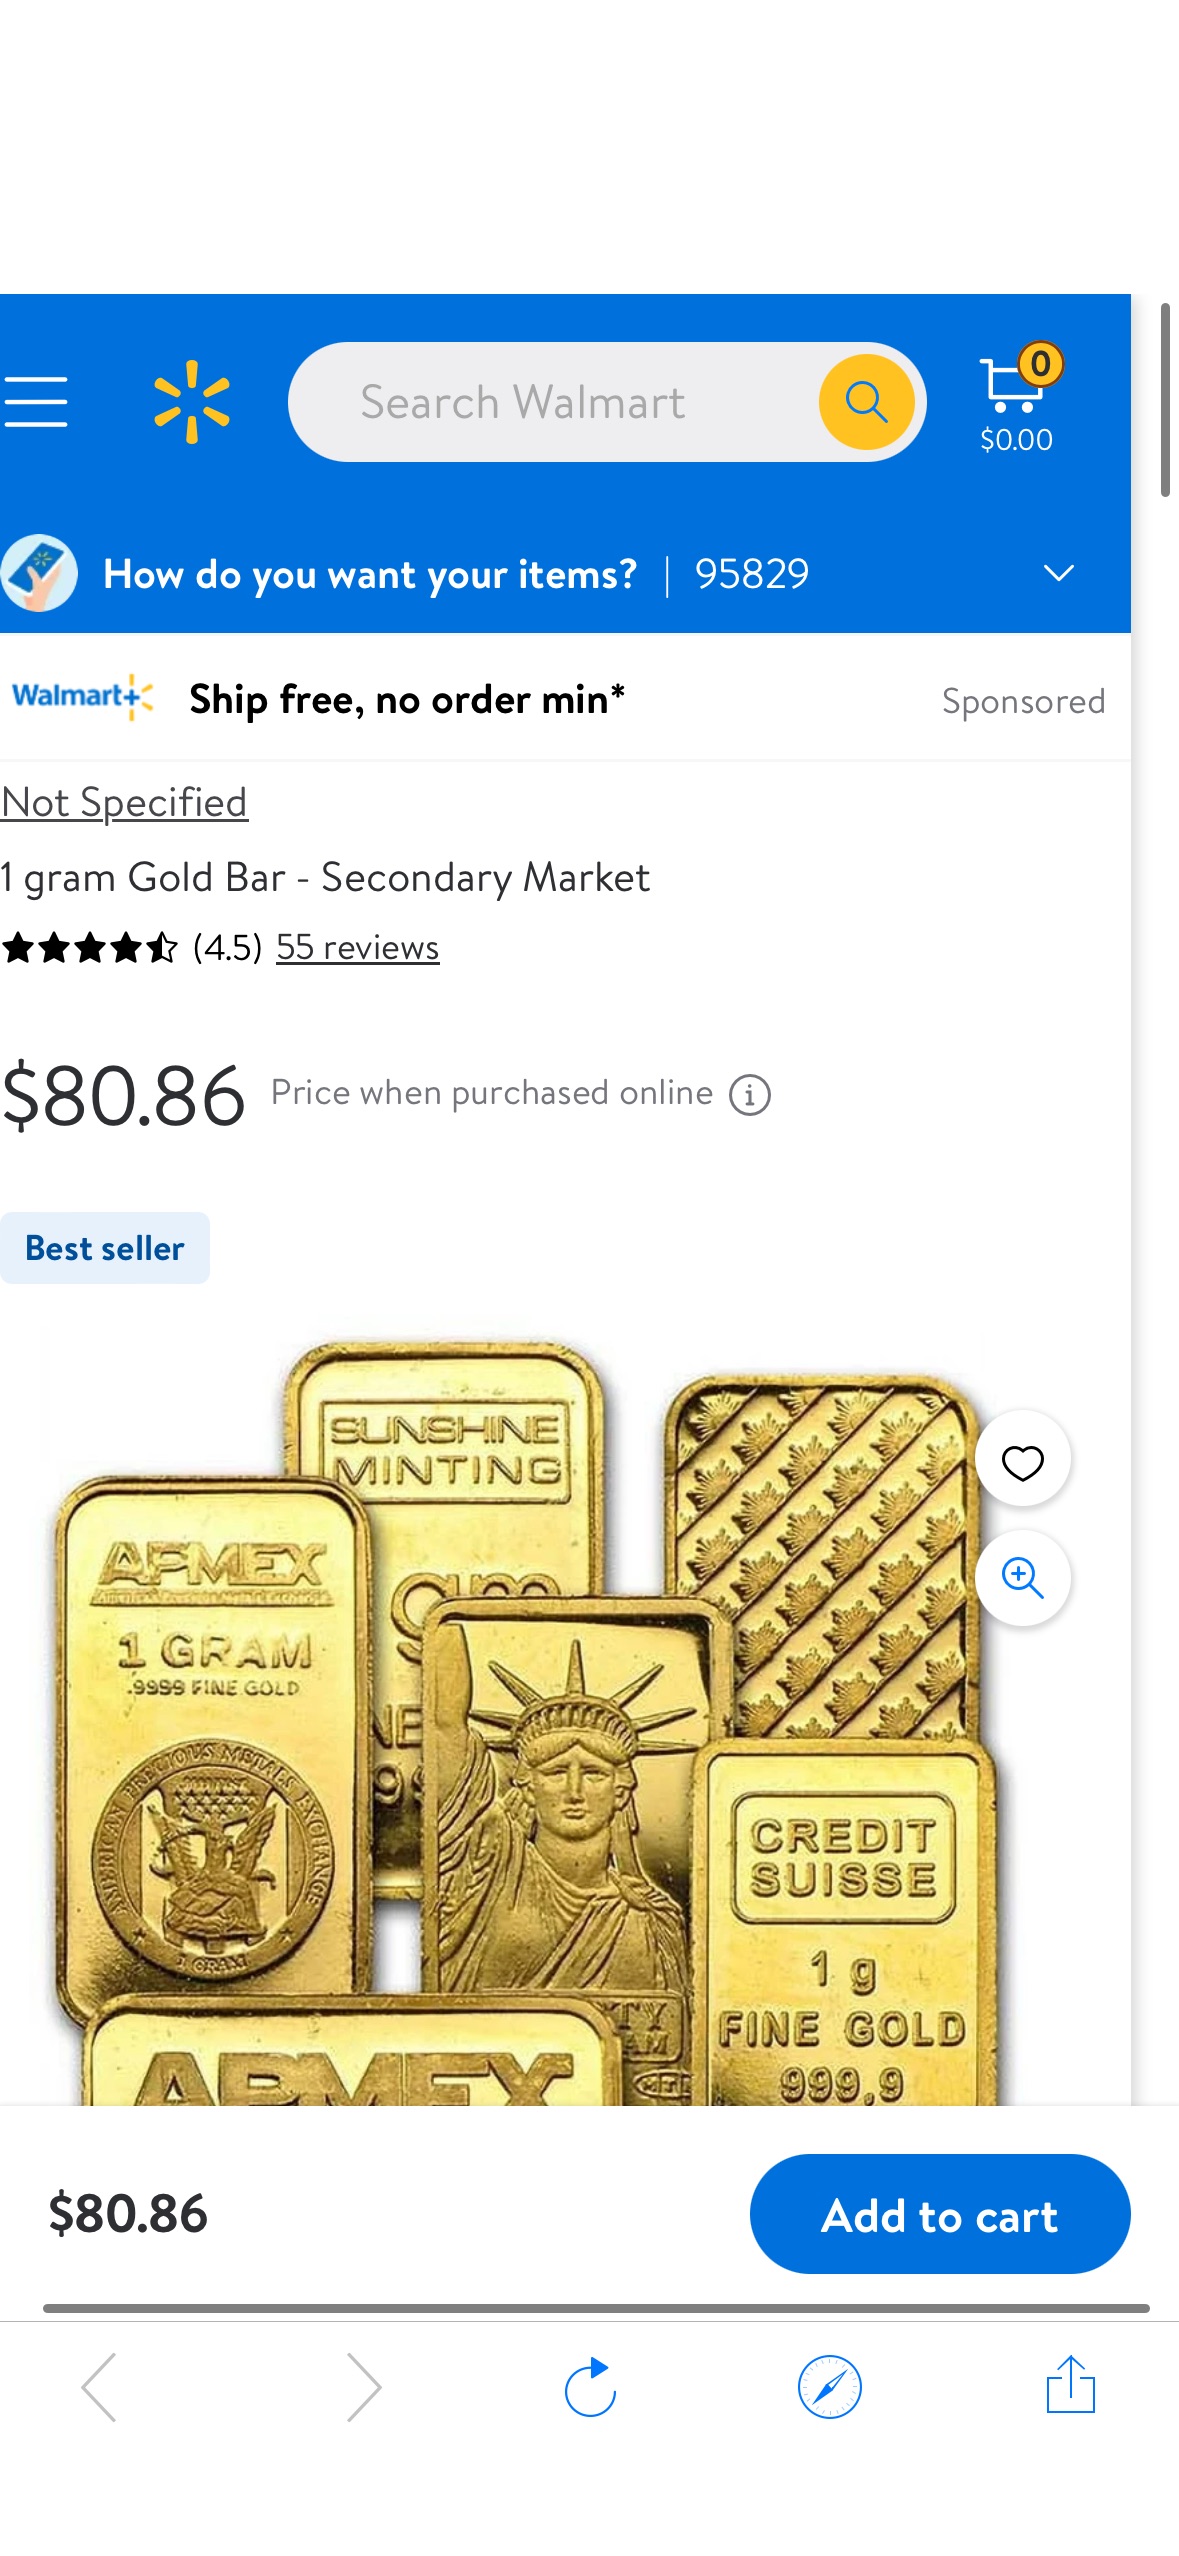 1 gram Gold Bar - Secondary Market - Walmart.com